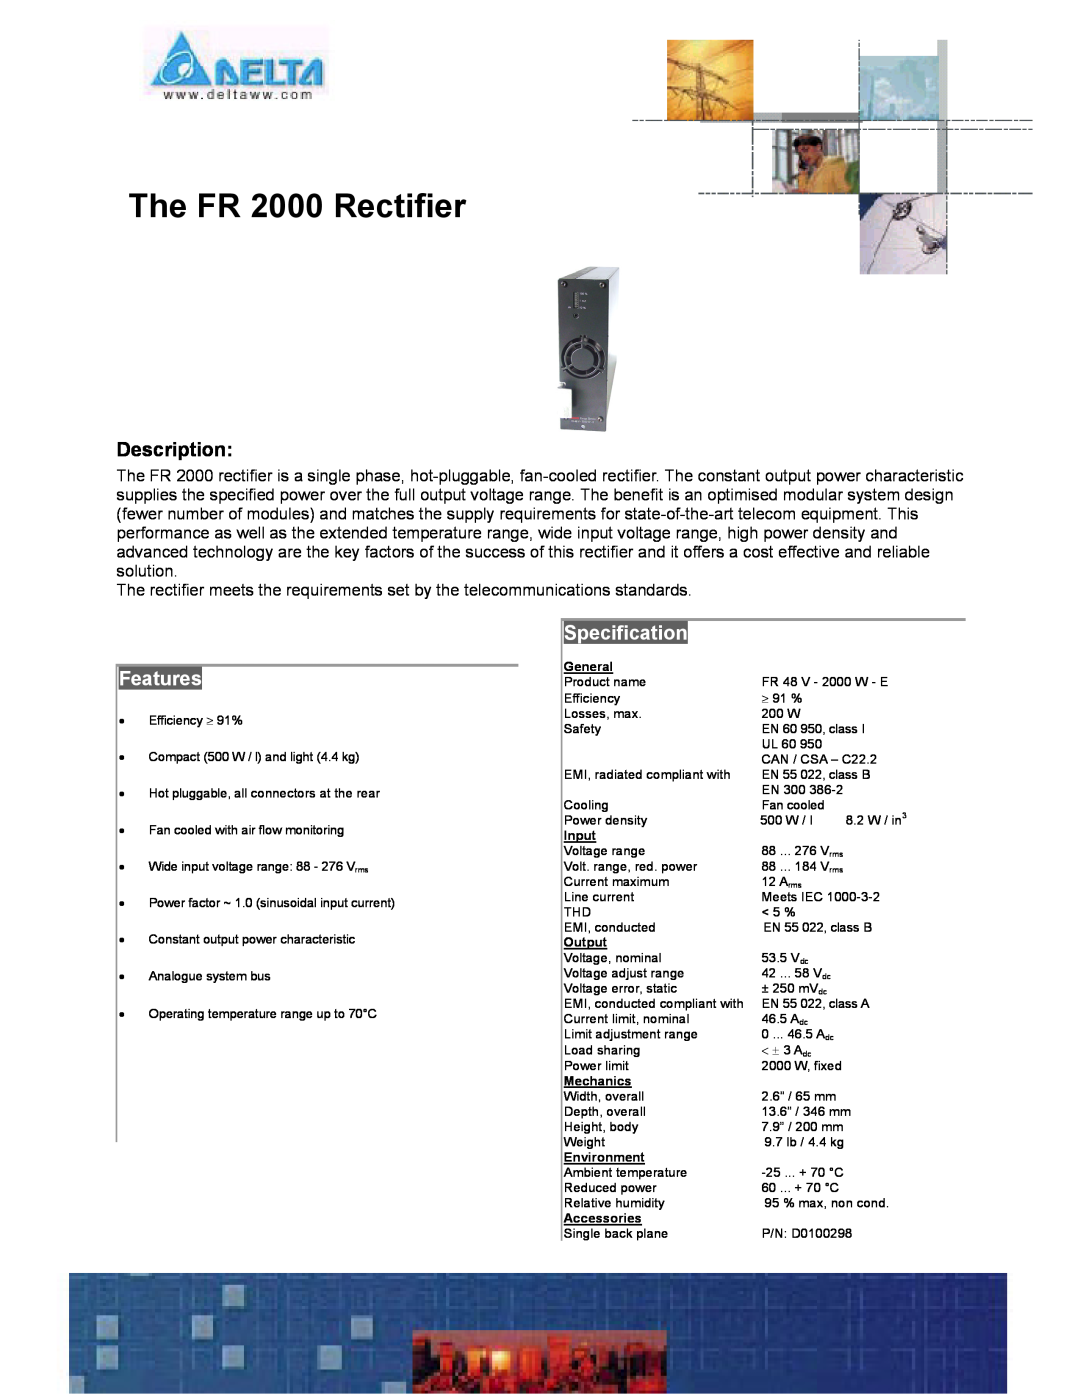 Delta Electronics manual The FR 2000 Rectifier, Description, Features, Specification 